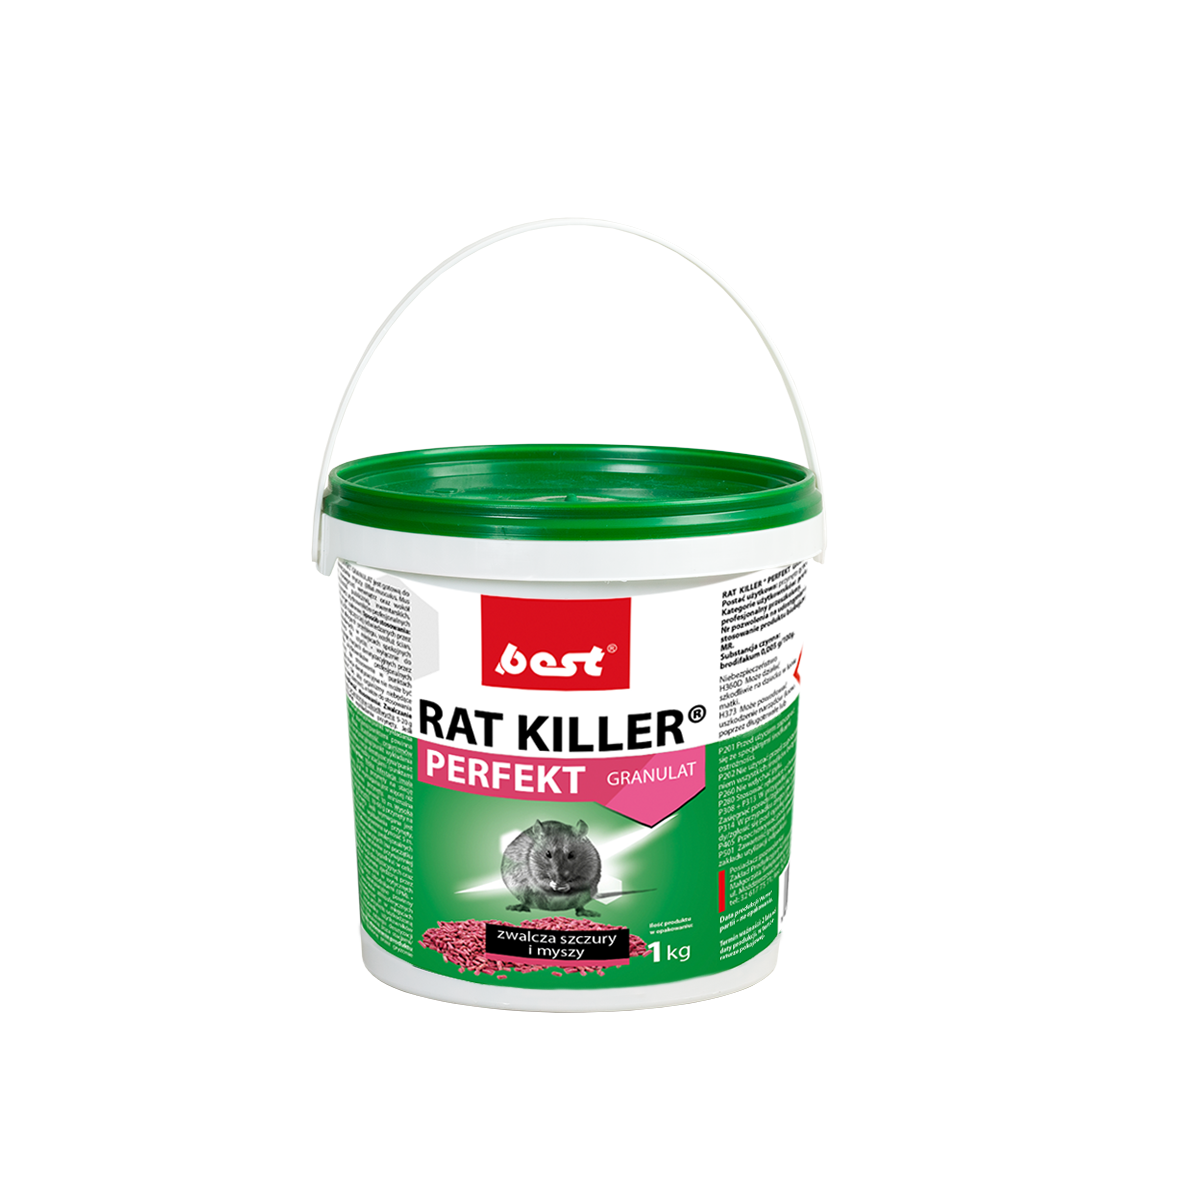 Rat Killer Perfekt — granulat